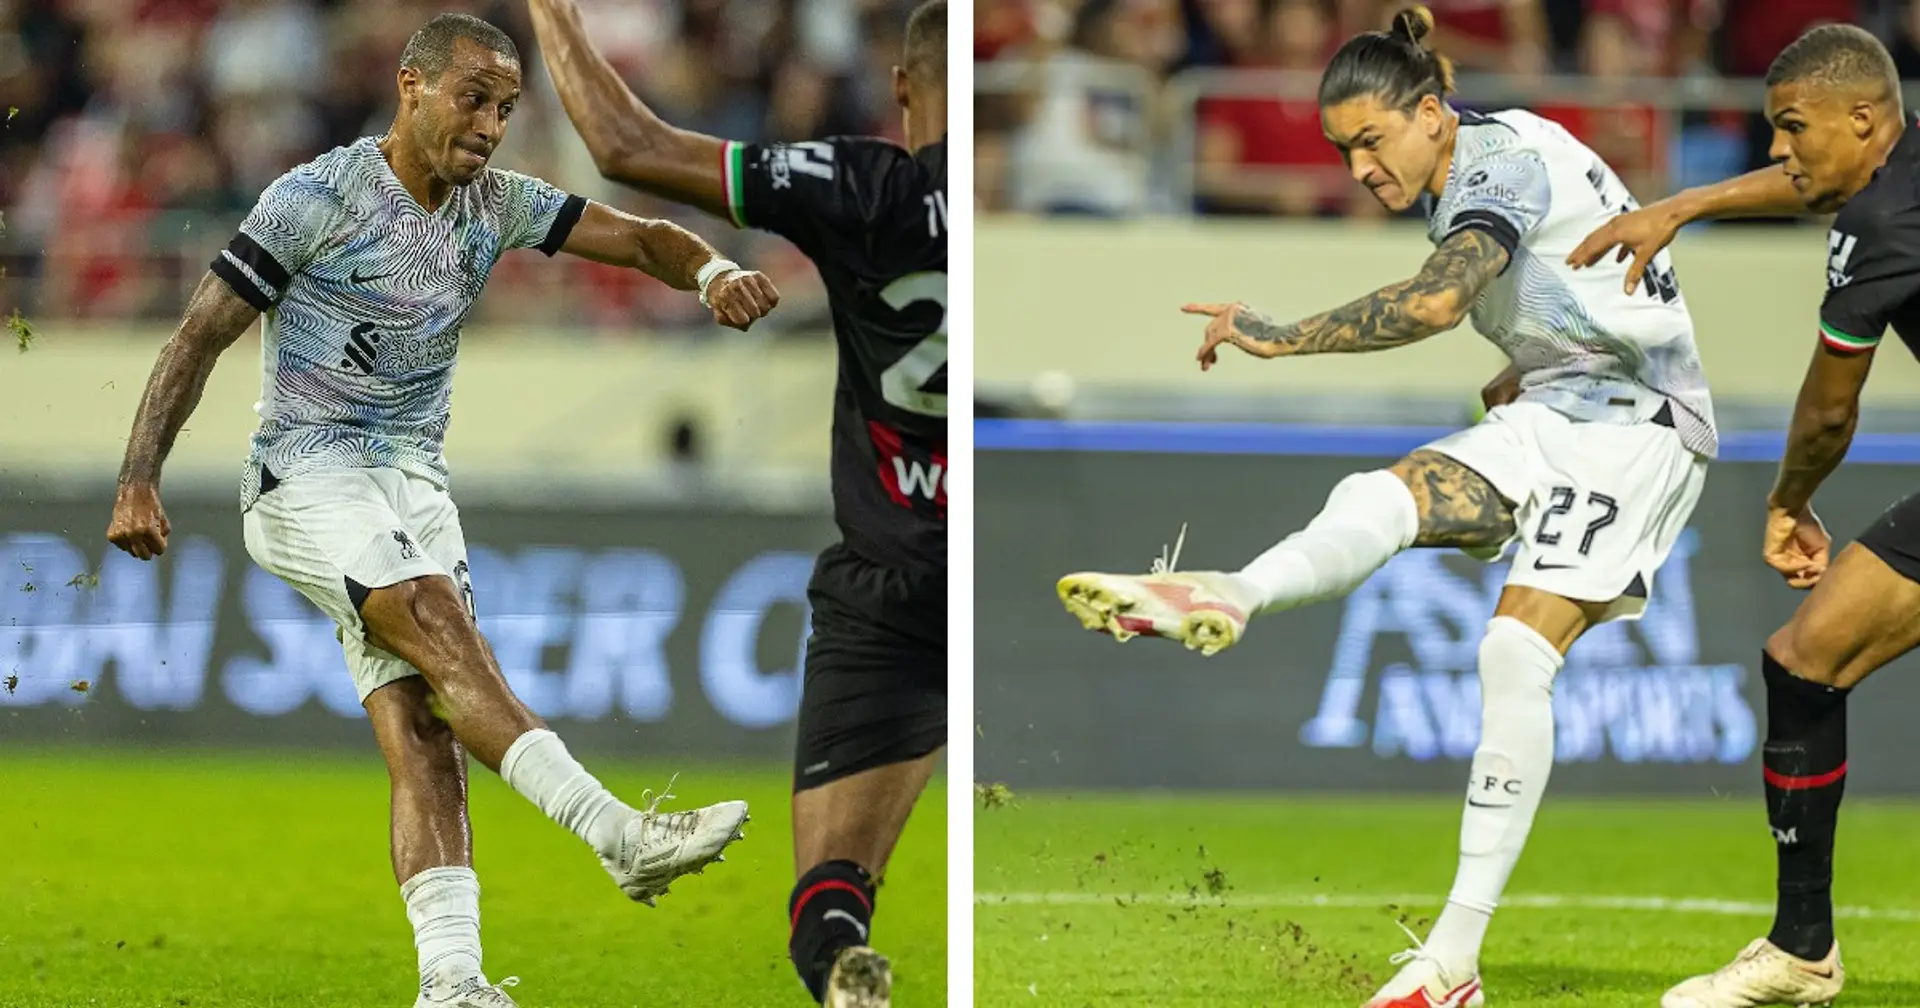 Thiago - 9, Nunez - 9: Rating Liverpool players in AC Milan win